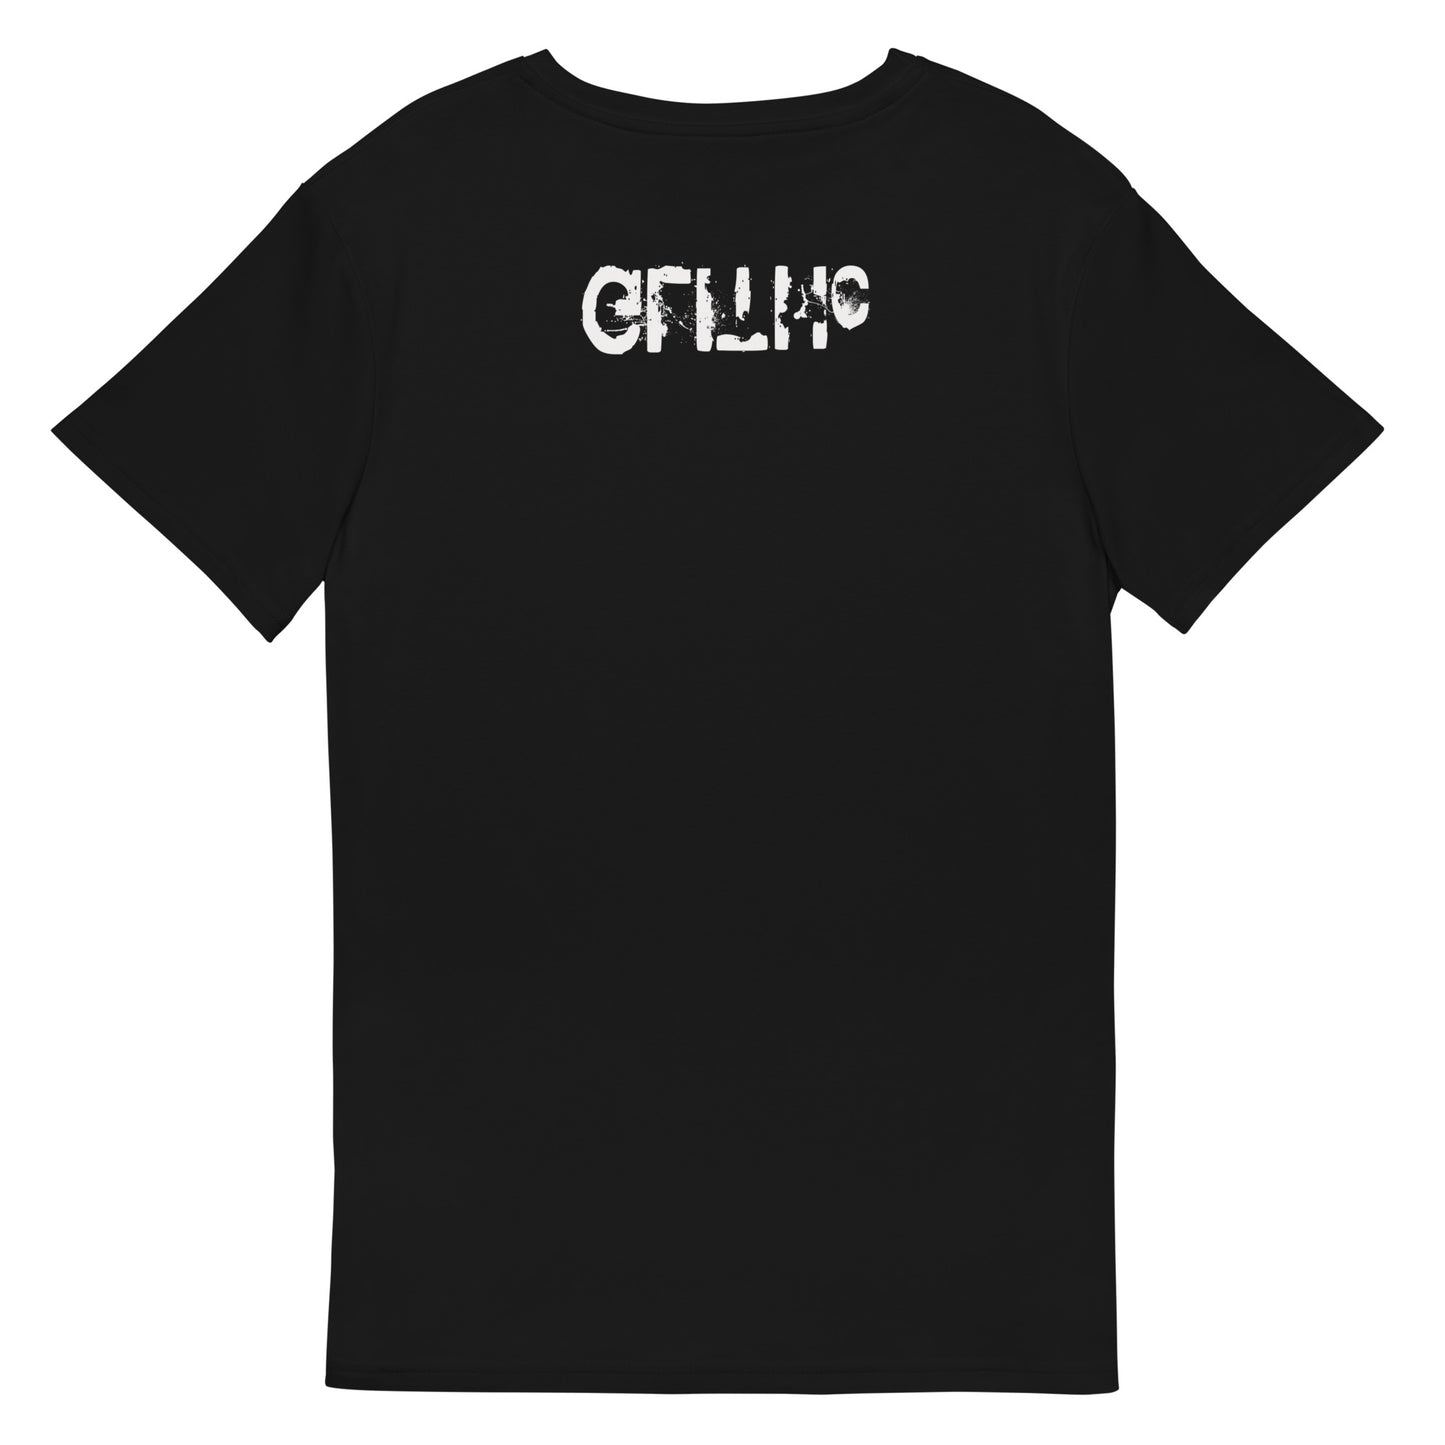 GLITHc Premium Cotton TShirt - Liquid Sky d-vices - Stagewear / Clubwear / Streetwear